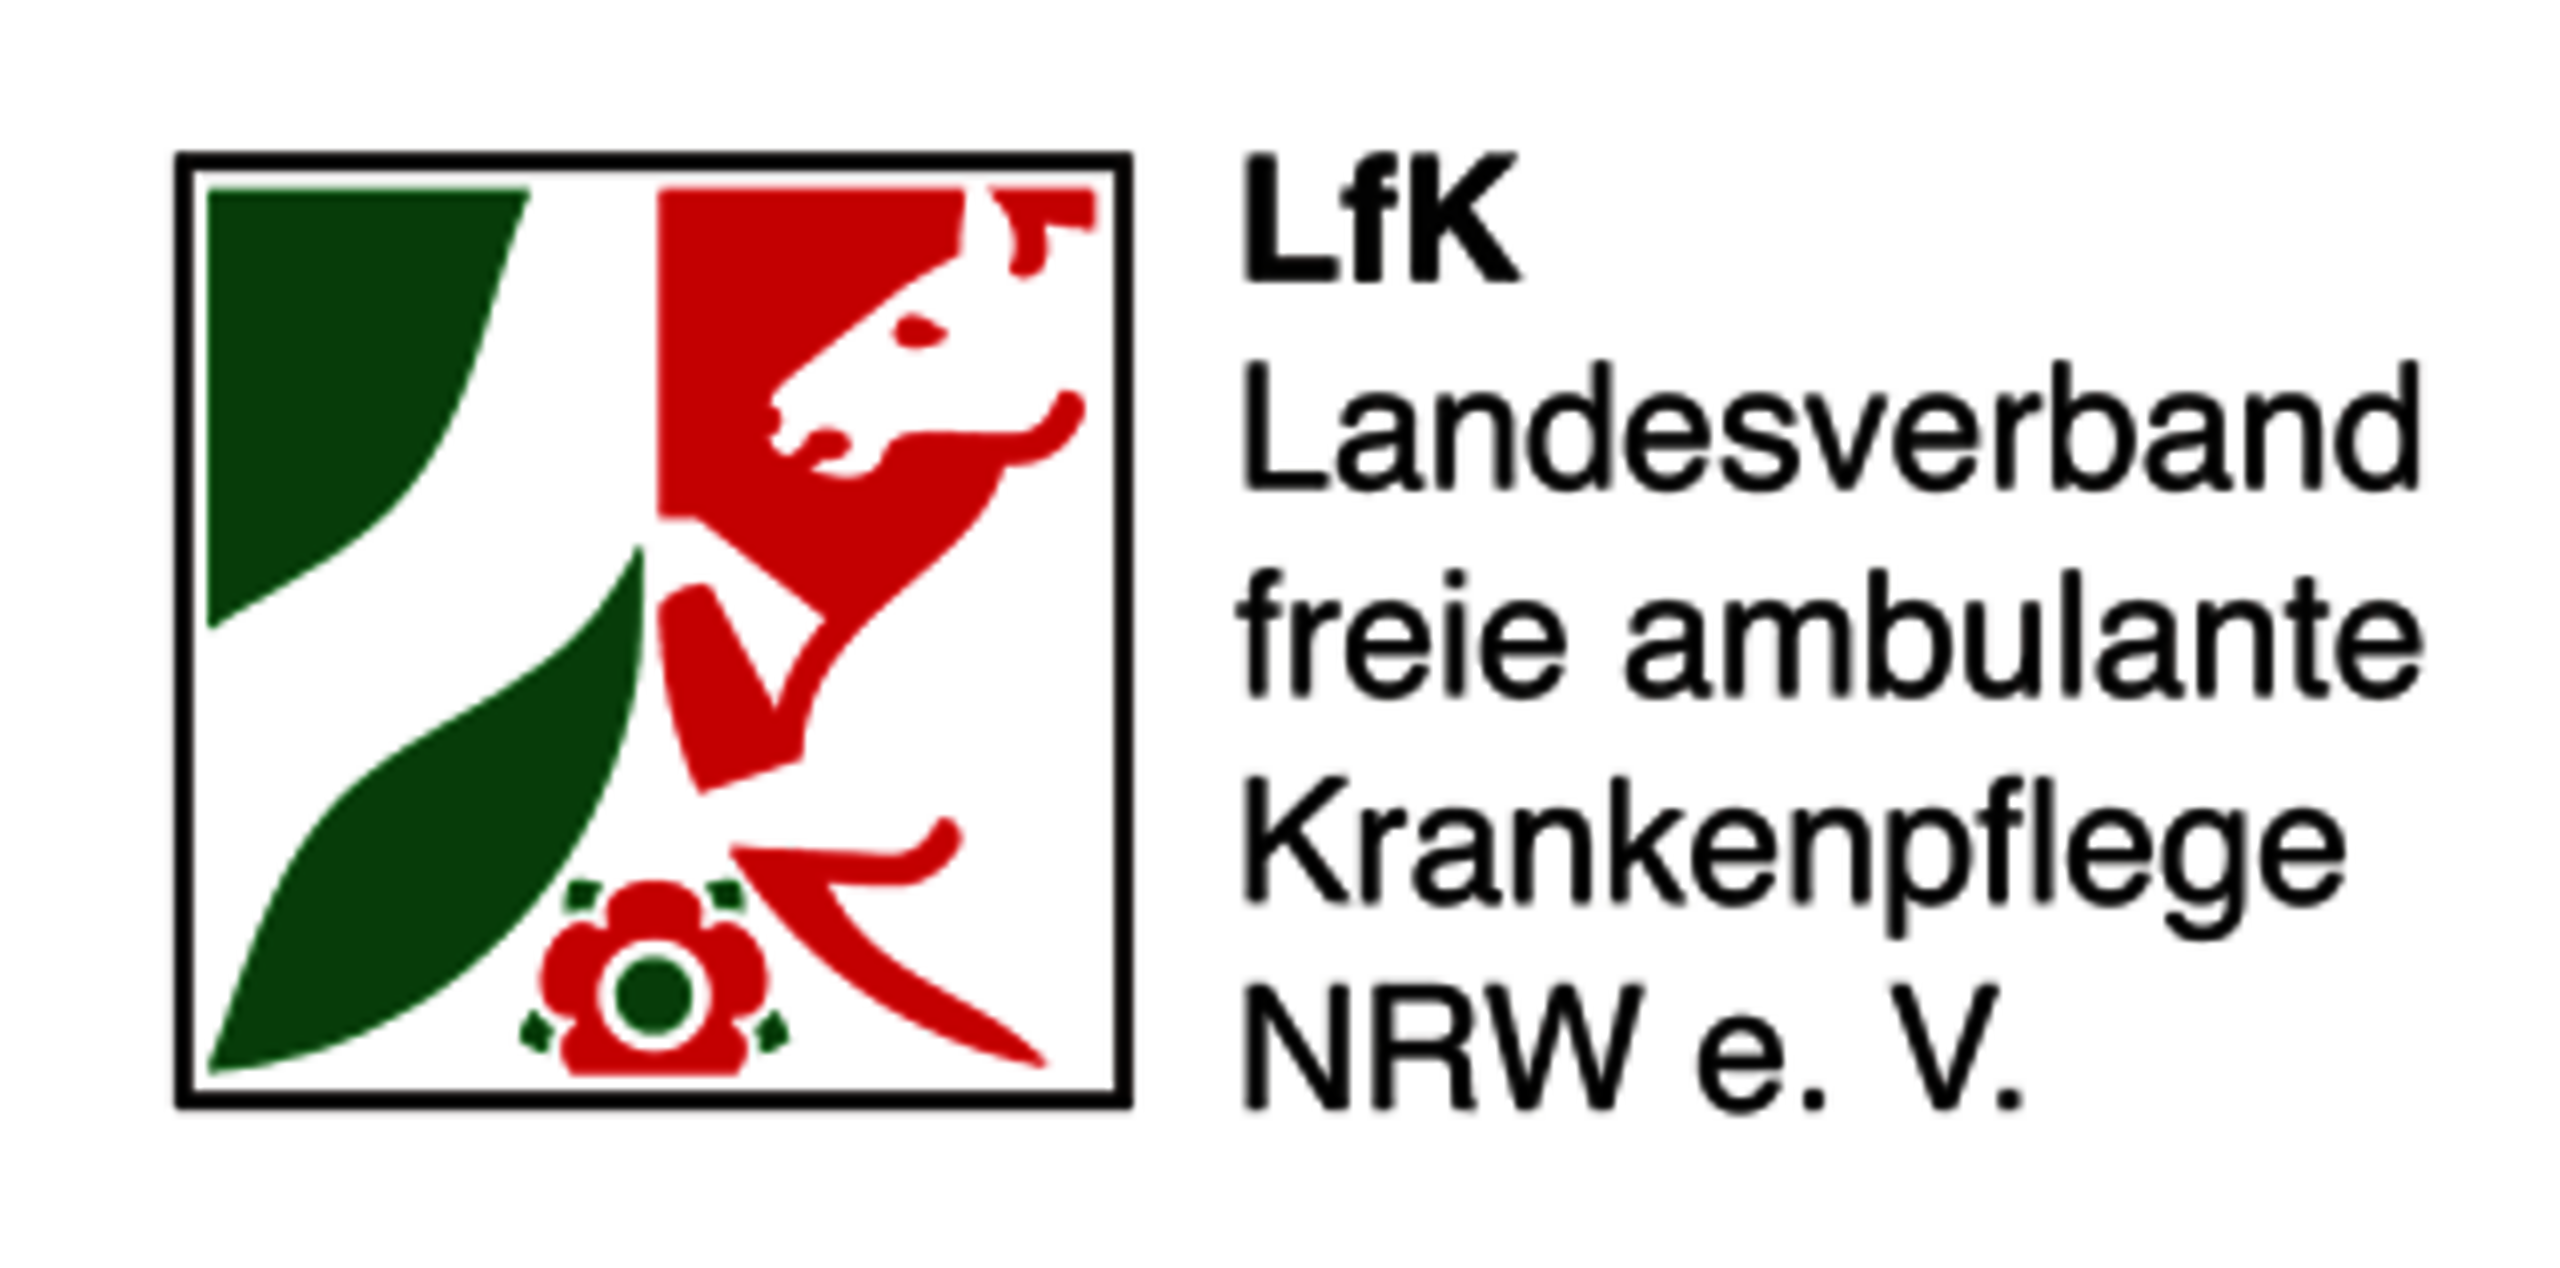 LfK – Landesverband freie ambulante Krankenpflege NRW e. V.